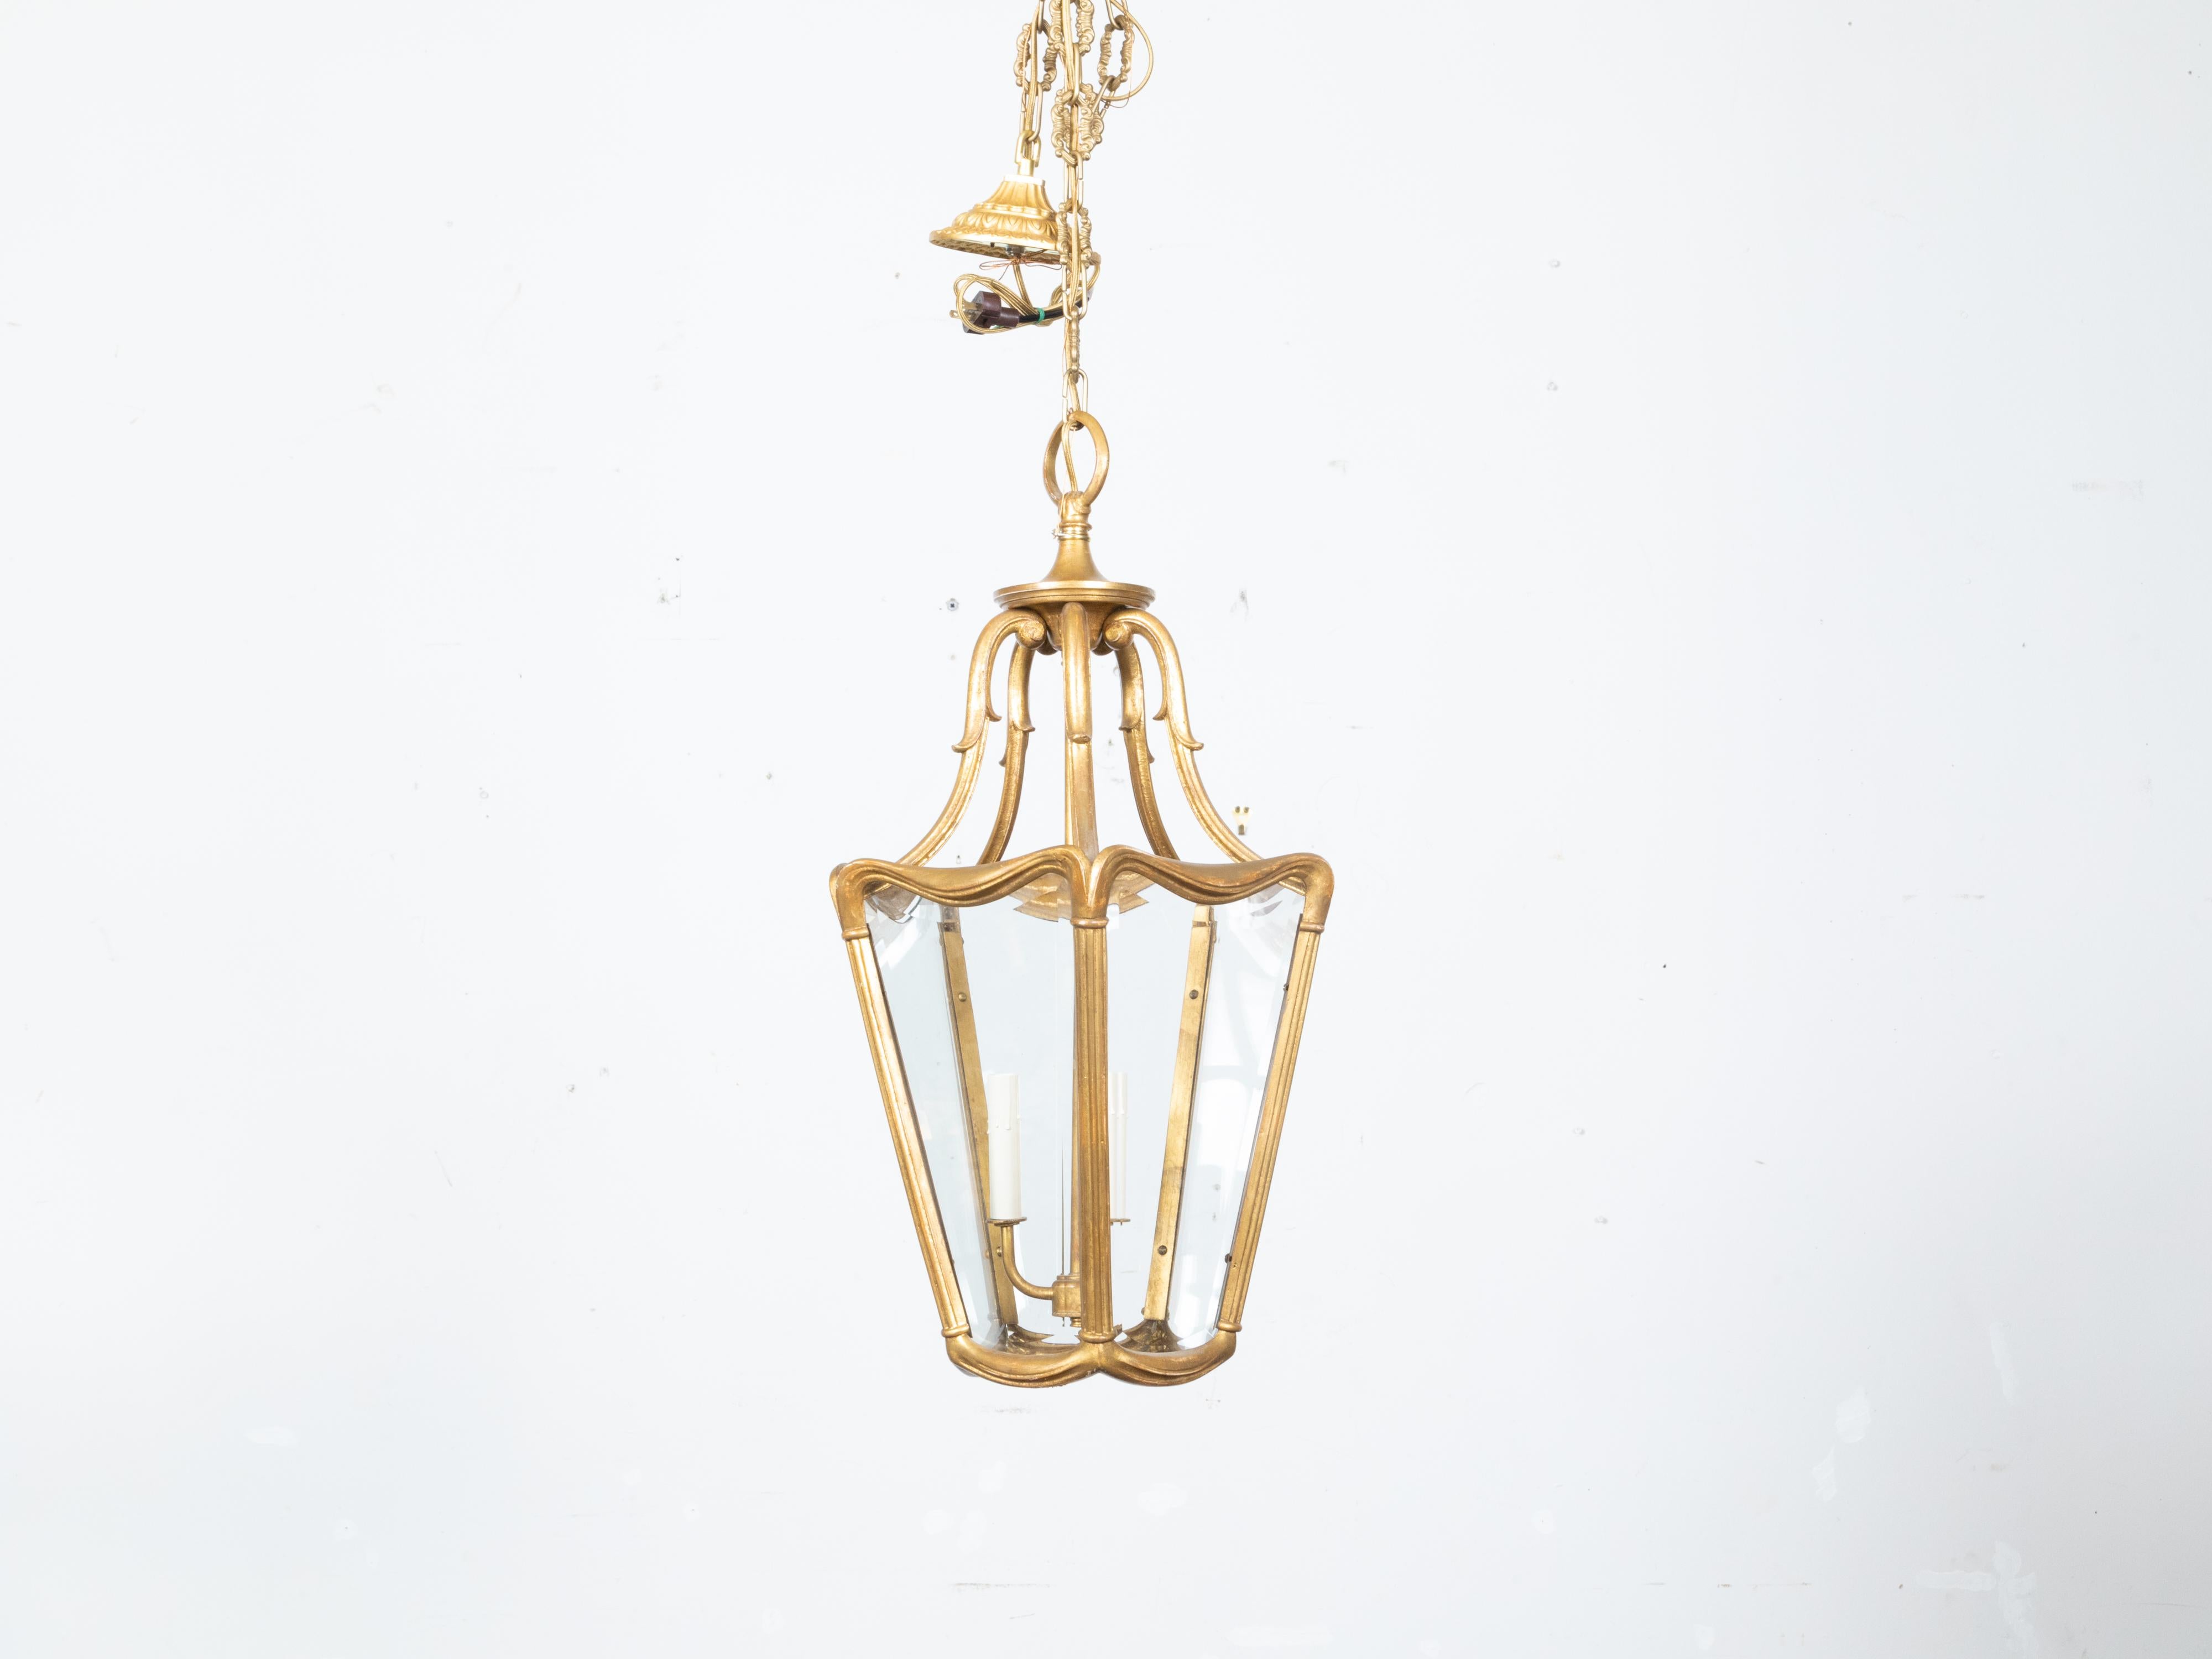 Dreiflammige Jugendstil-Laterne aus vergoldetem Metall mit subtilen Schnörkeleffekten (Art nouveau) im Angebot